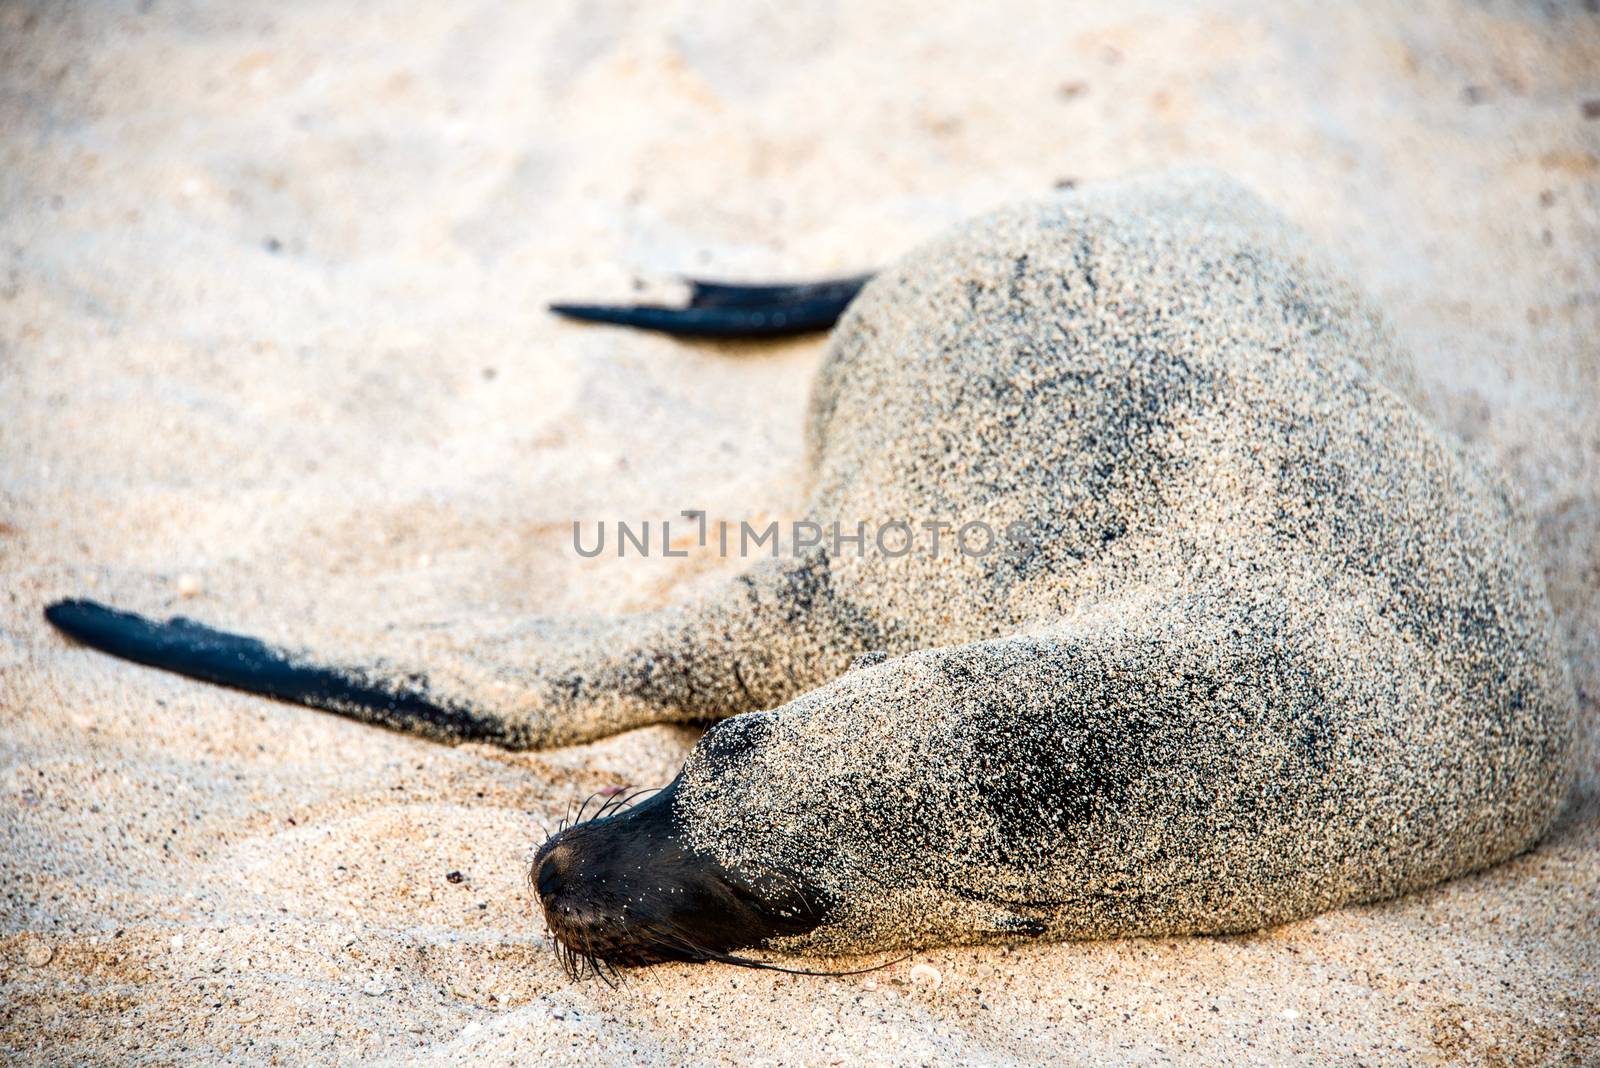 Sea lion resting under the sun, Puerto Baquerizo Moreno, Galapag by xura